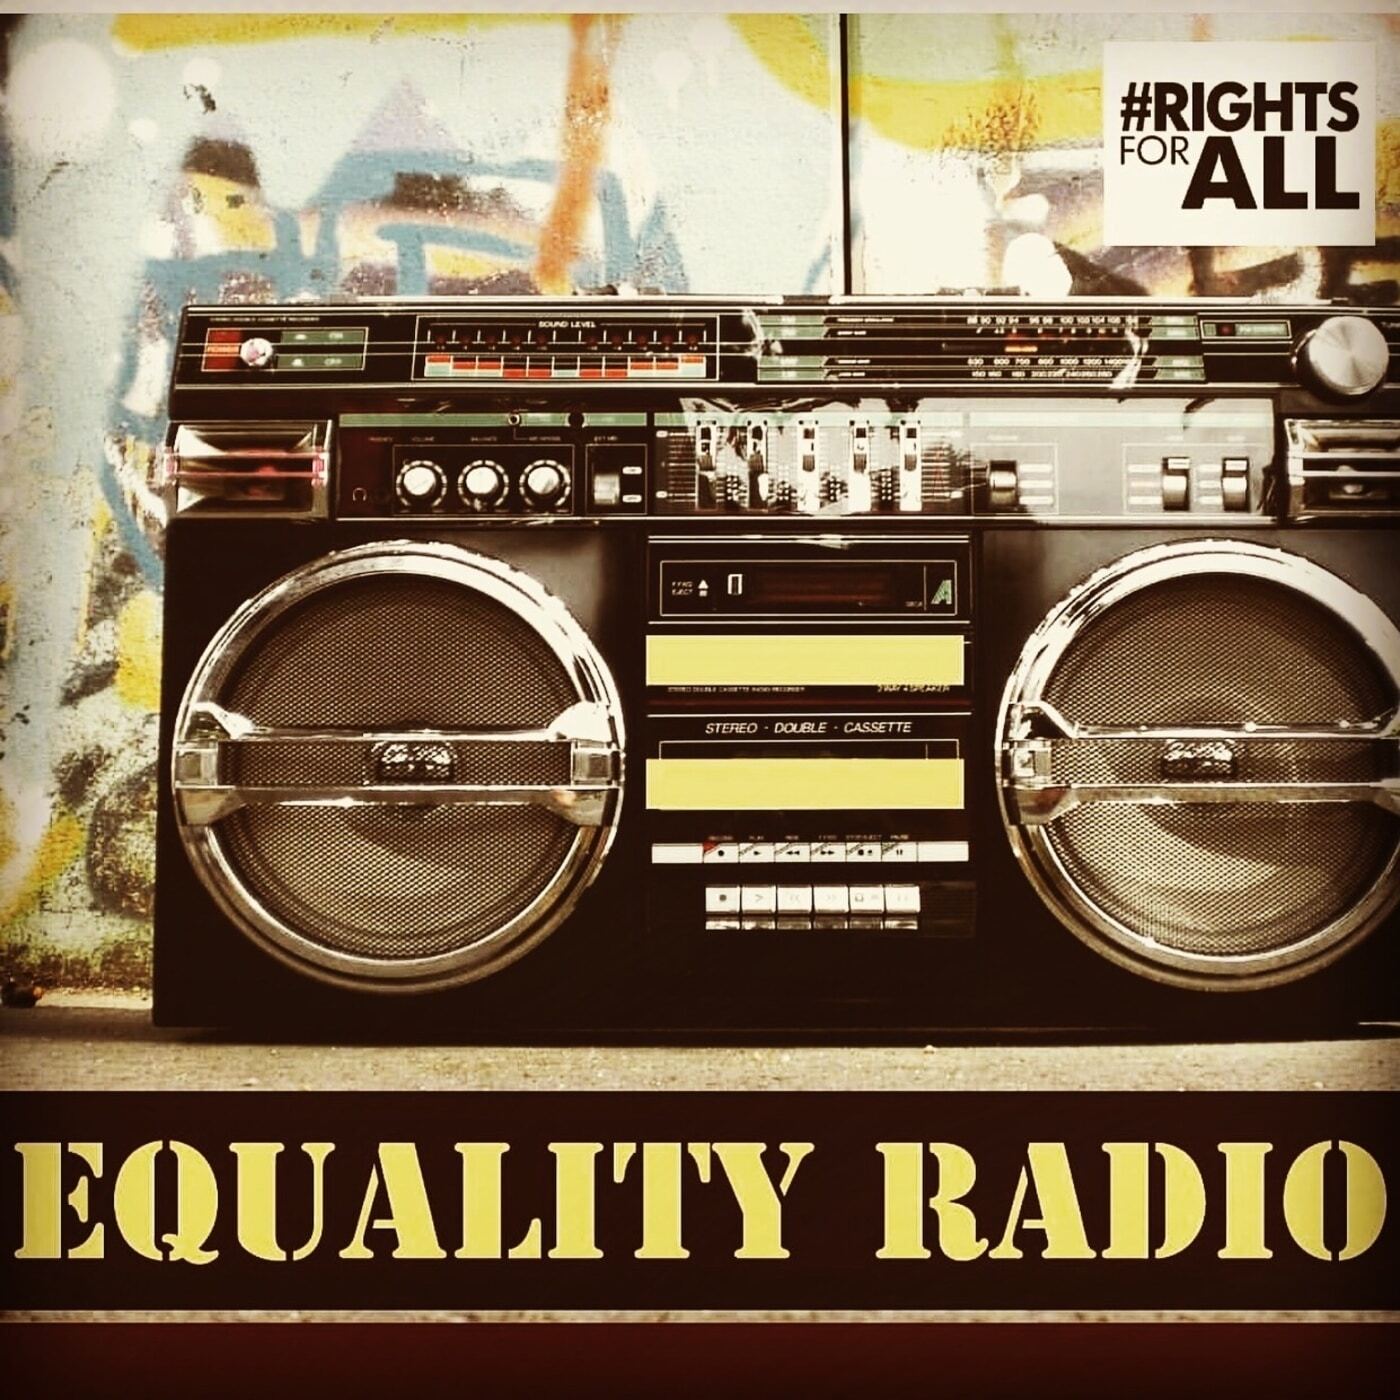 Equality Radio with Dj Proper